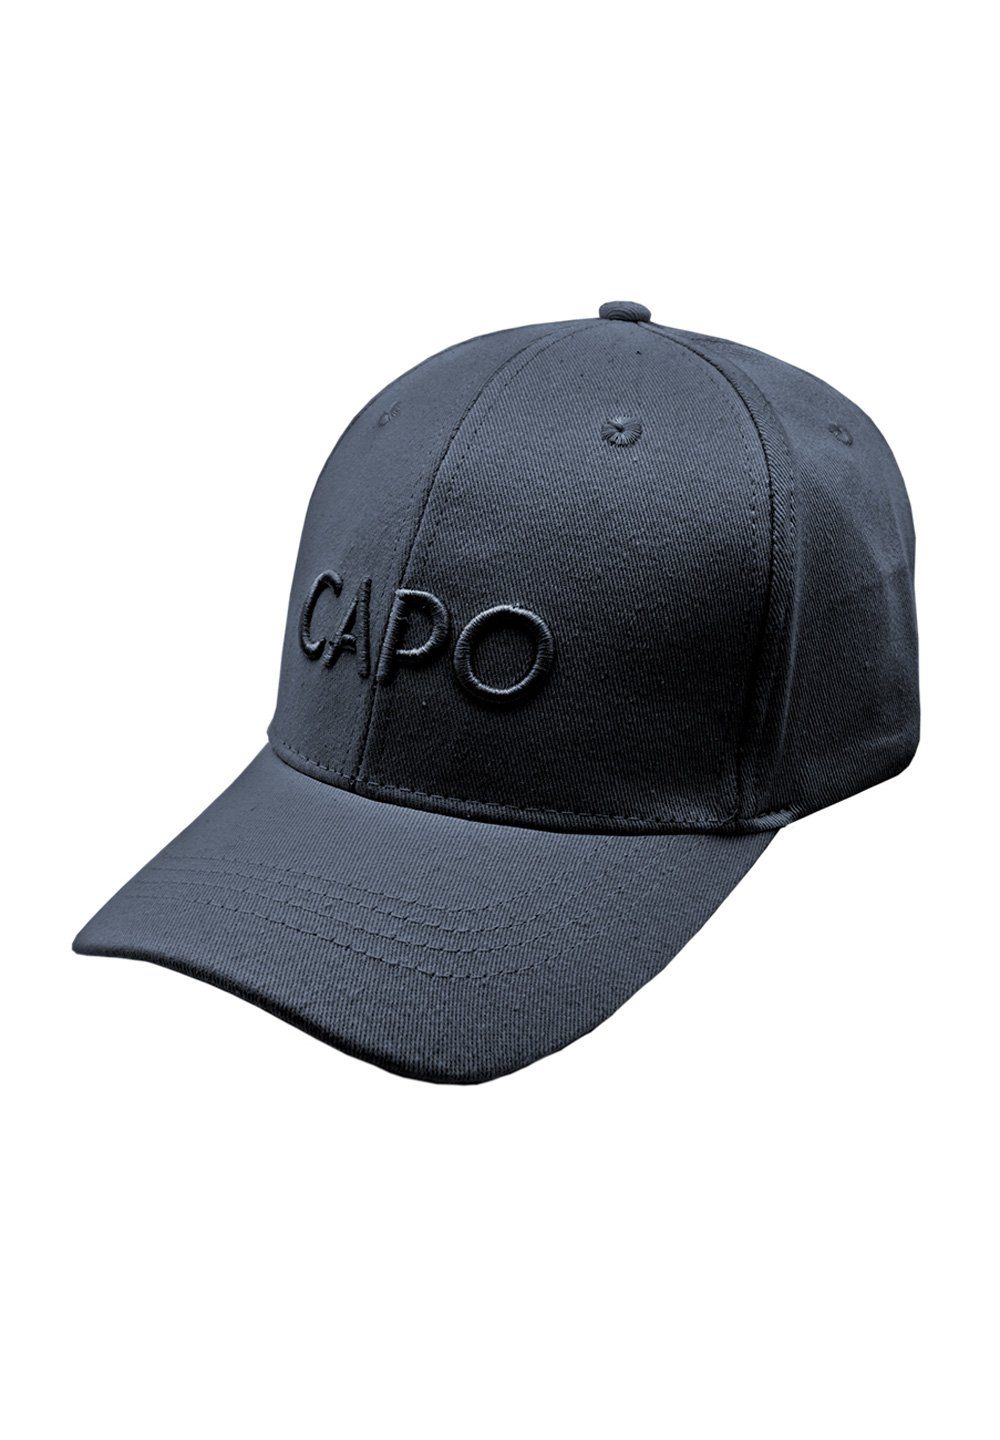 CAPO Baseball Cap Baseballcap 3D-Stickerei, Panel navy 6